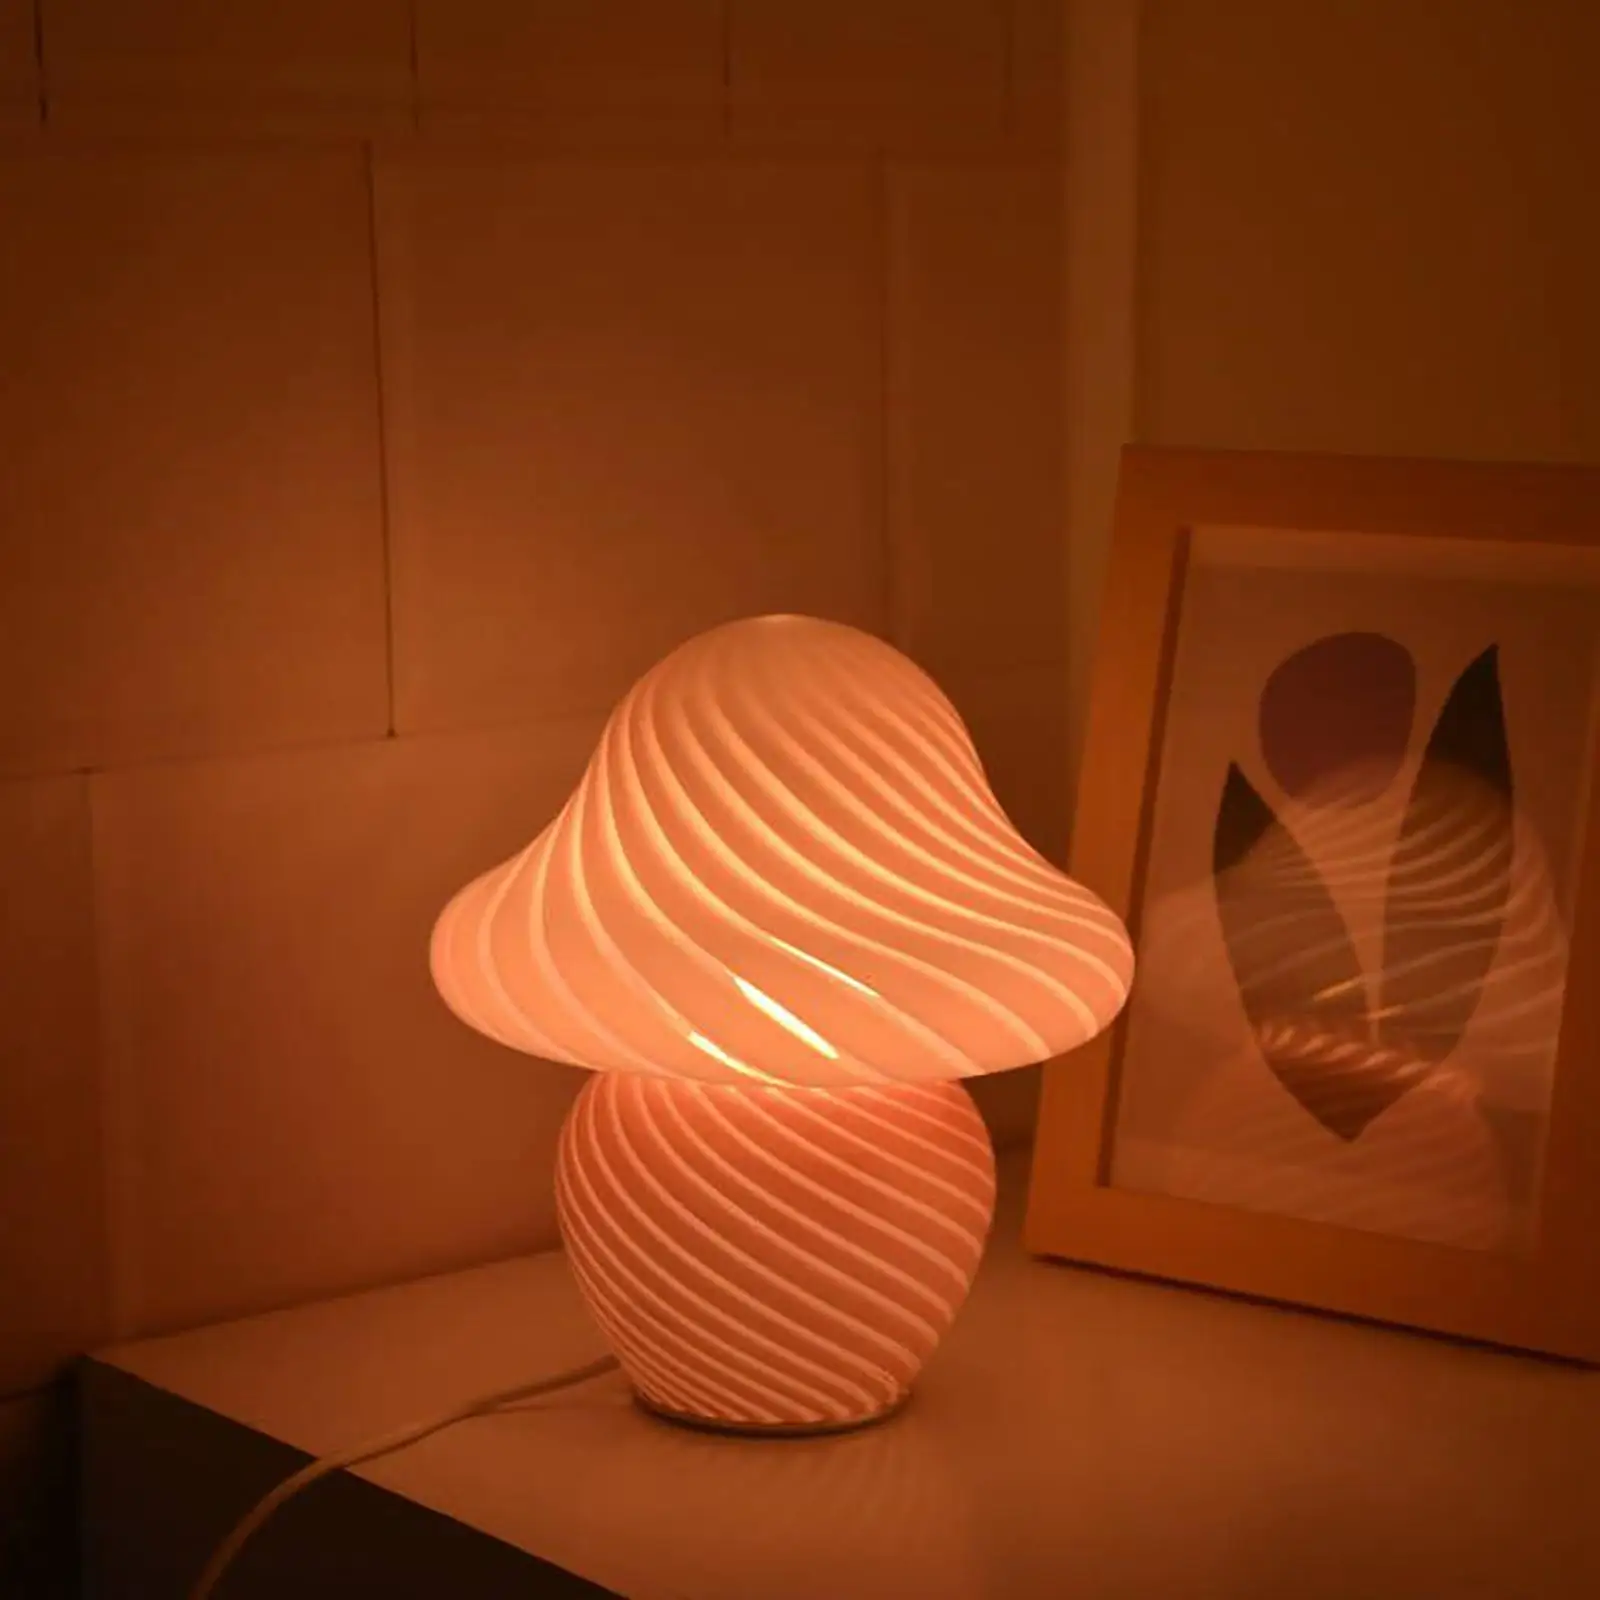 Mushroom Table Lamp, Bedside Lamp Adjustable Desk Lamp Glass Nightstand Lamp for Bedroom, Living Room, Office